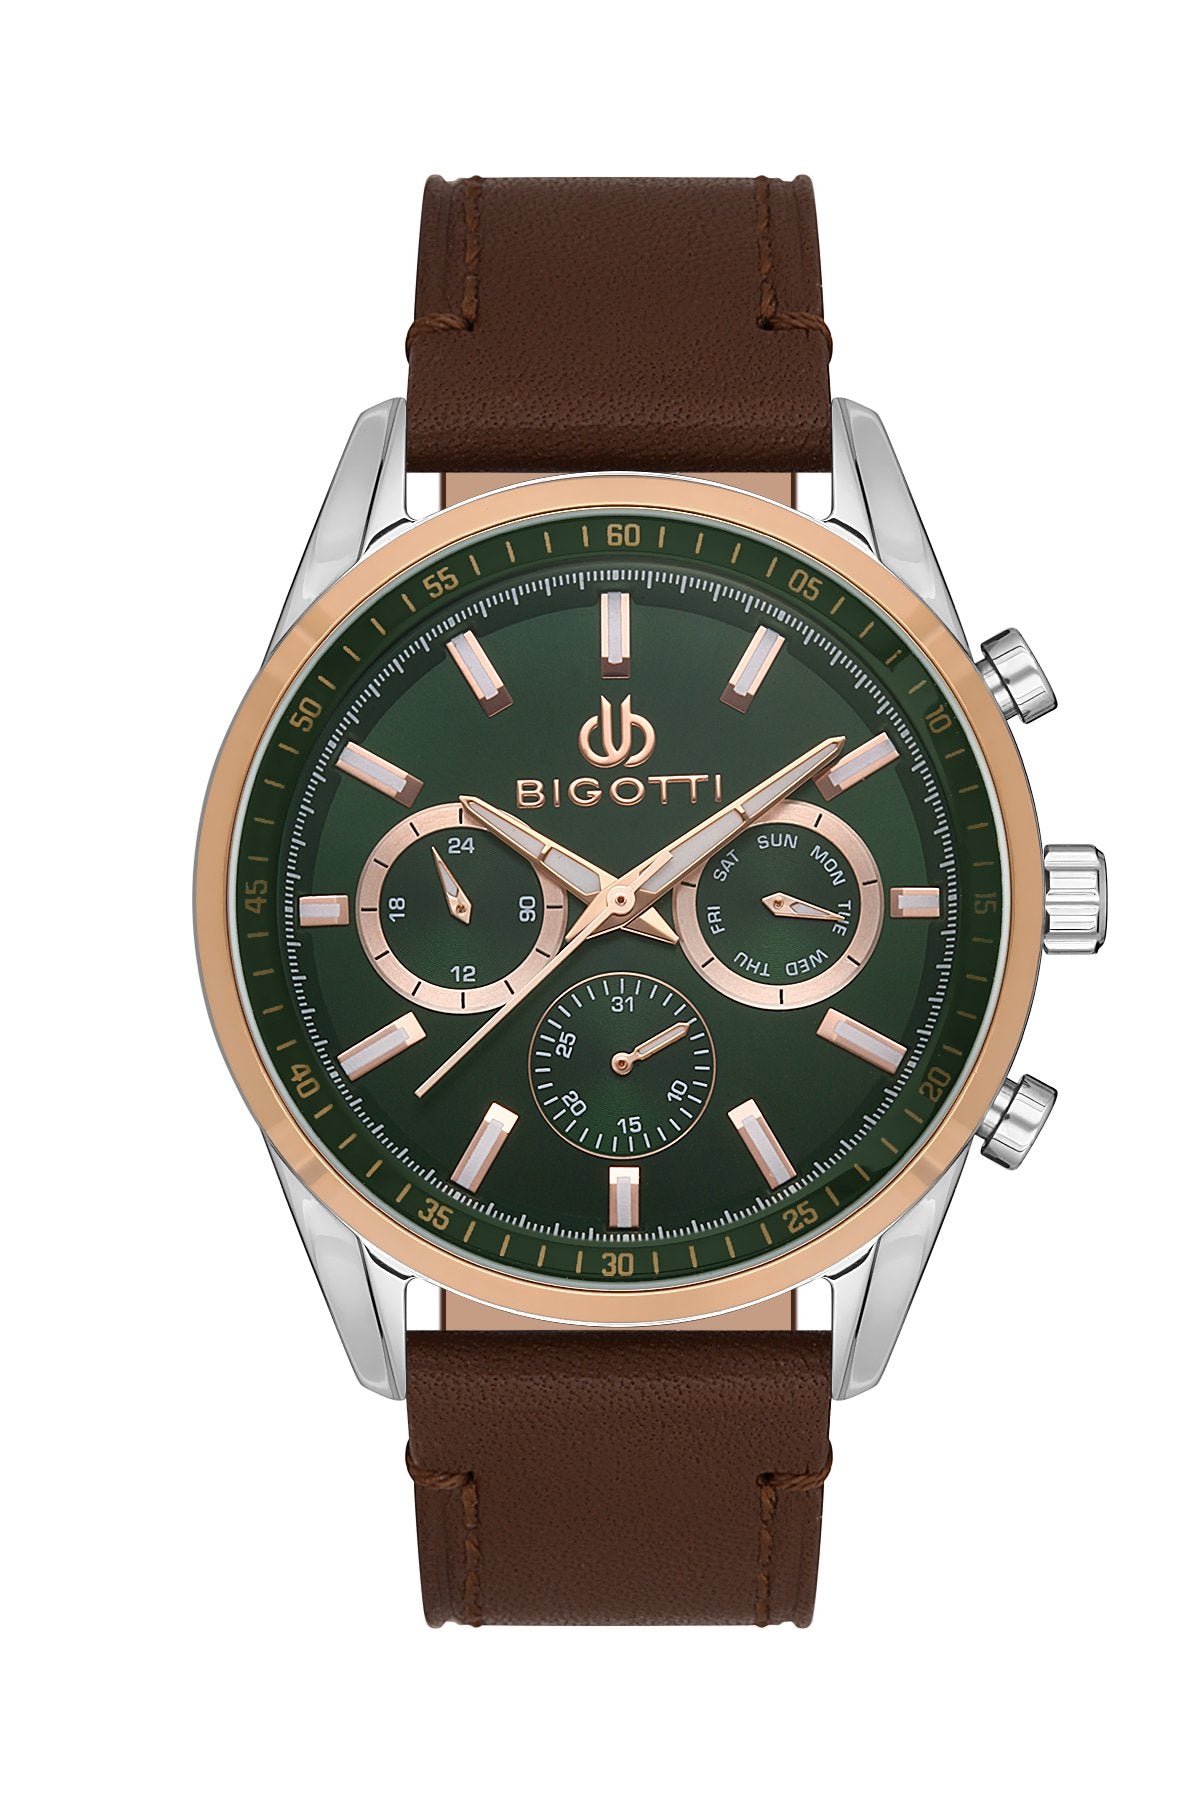 Takreem Premium Men's Watch by Bigotti Milano - BG.1.10490-4 - #shoTakreem Premium Men's Watch by Bigotti Milano - BG.1.10490-4p_name#Takreem Premium Men's Watch by Bigotti Milano - BG.1.10490-4WatchBigotti MilanoTakreem.joBG.1.10490-48.68231E+12MenBrownLeatherTakreem Premium Men's Watch by Bigotti Milano - BG.1.10490-4